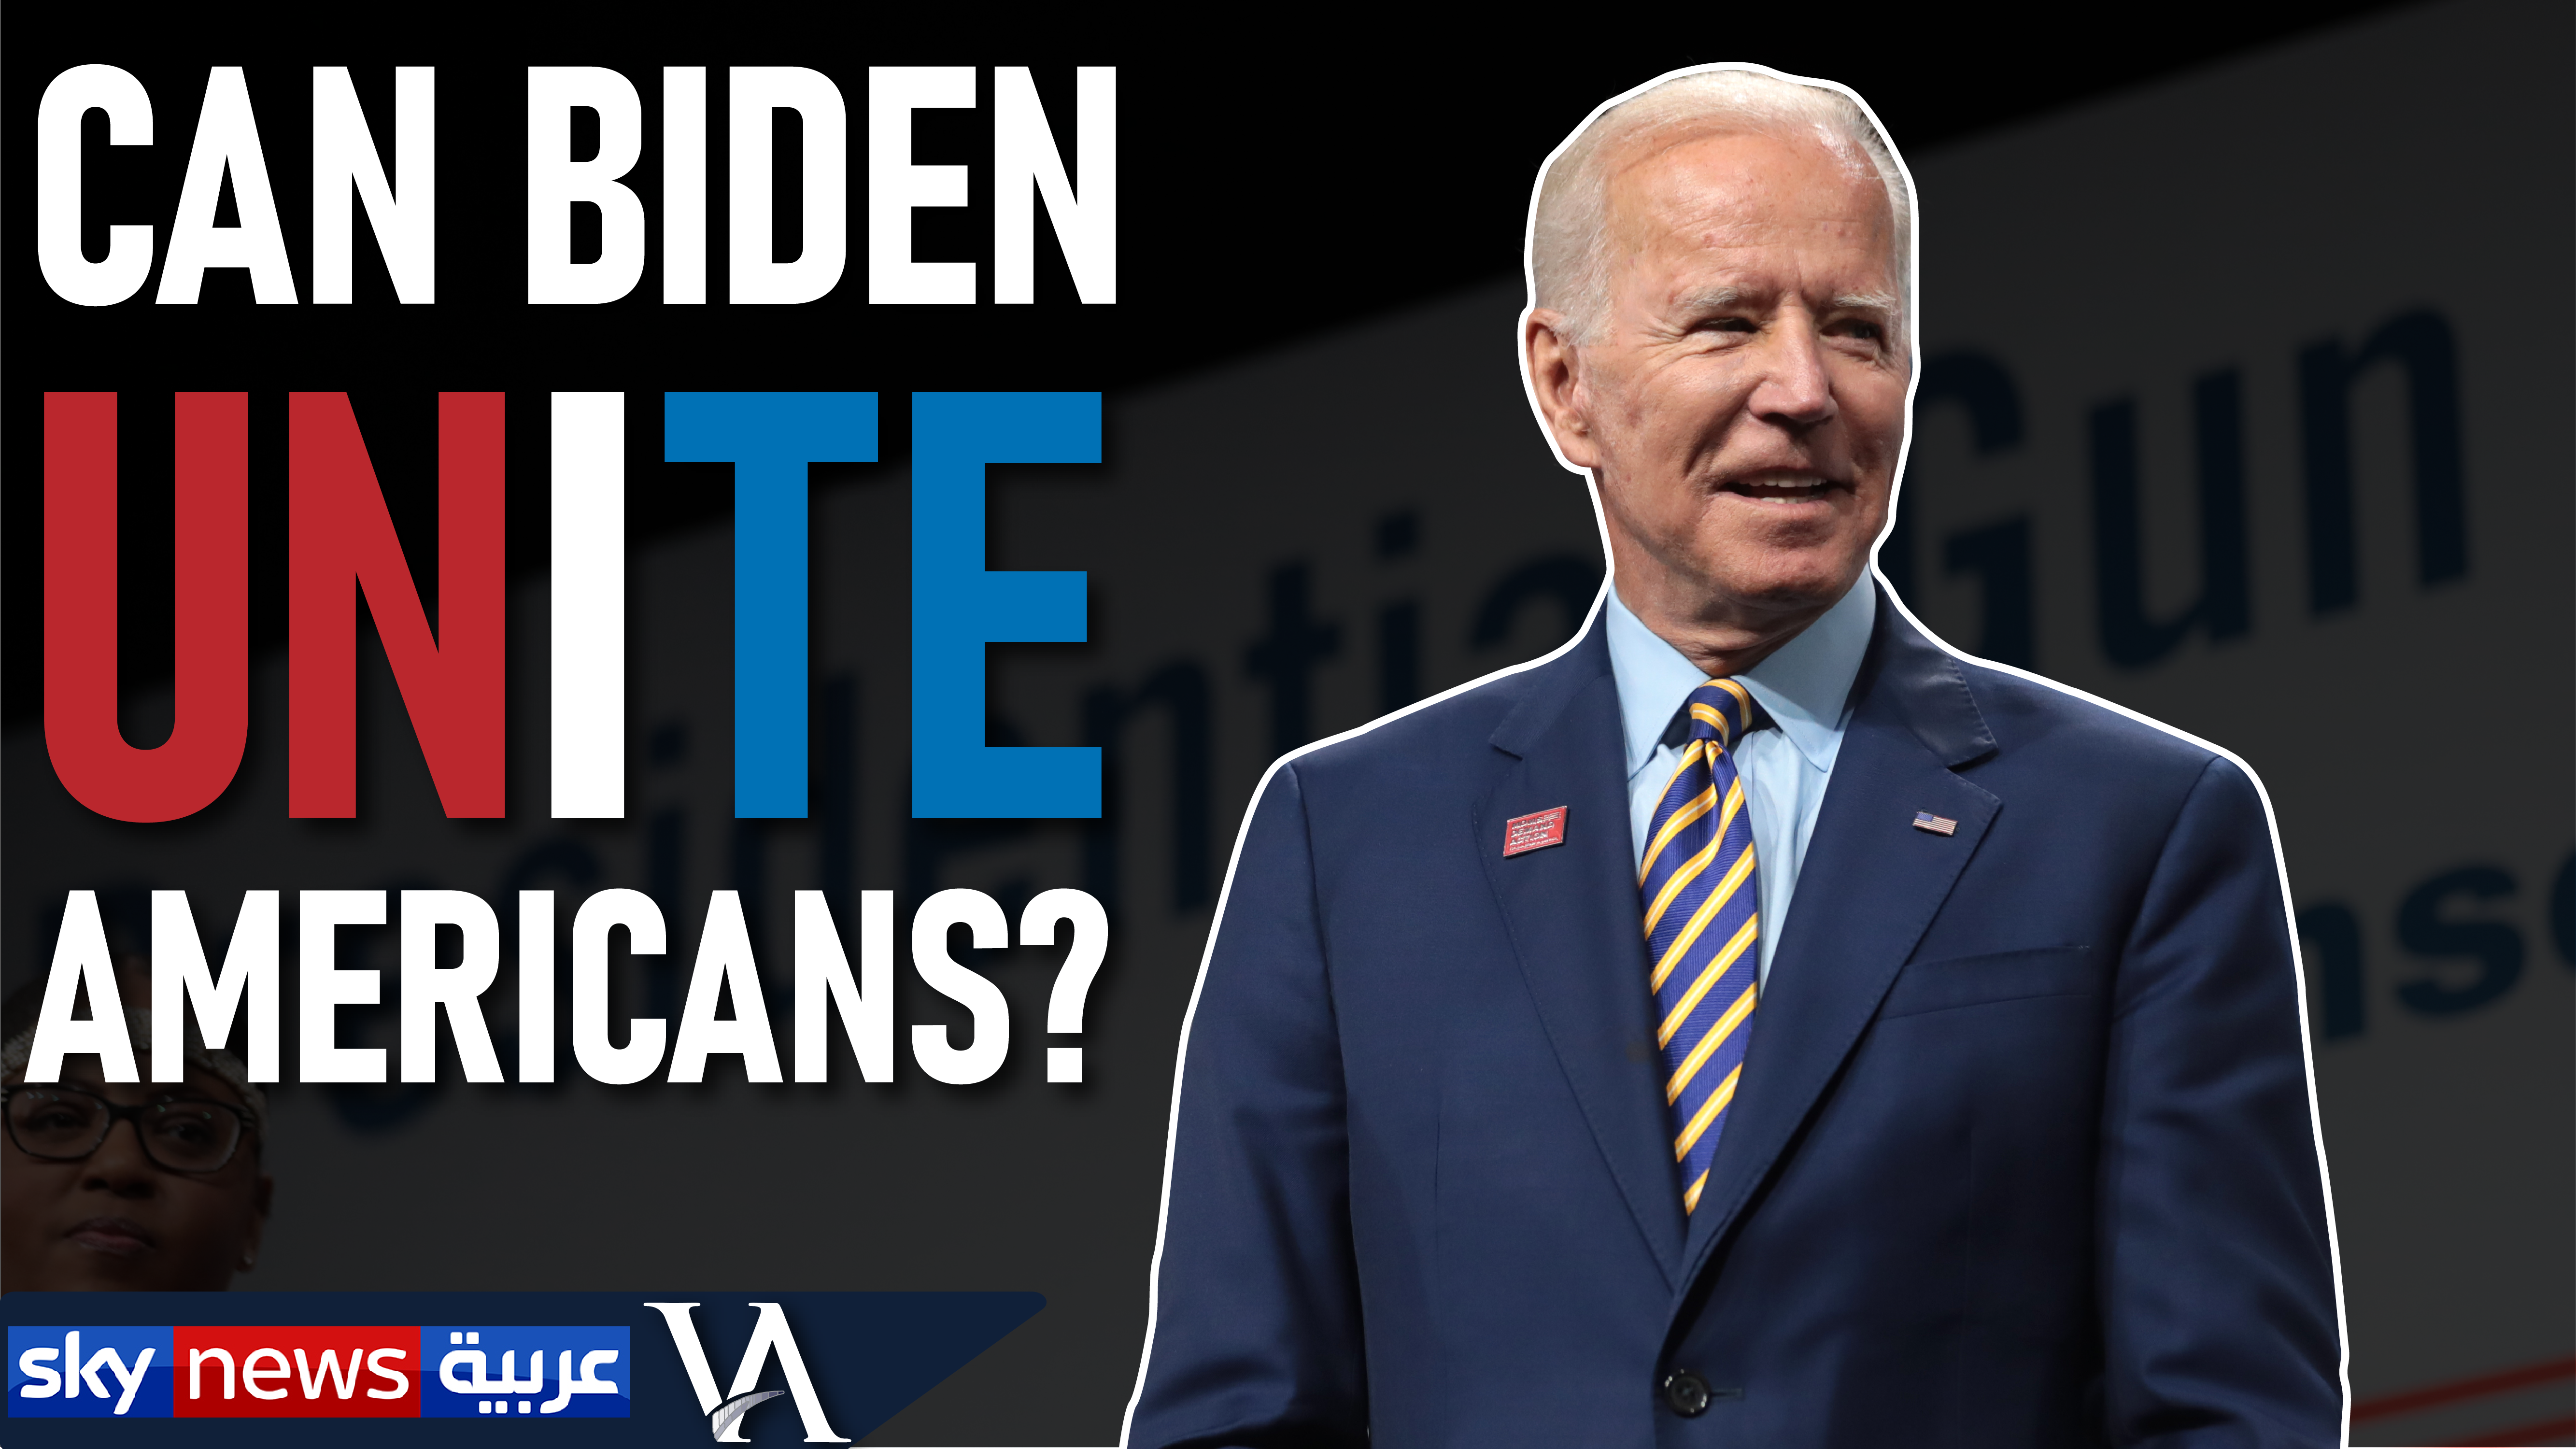 Will Biden Unite Americans?